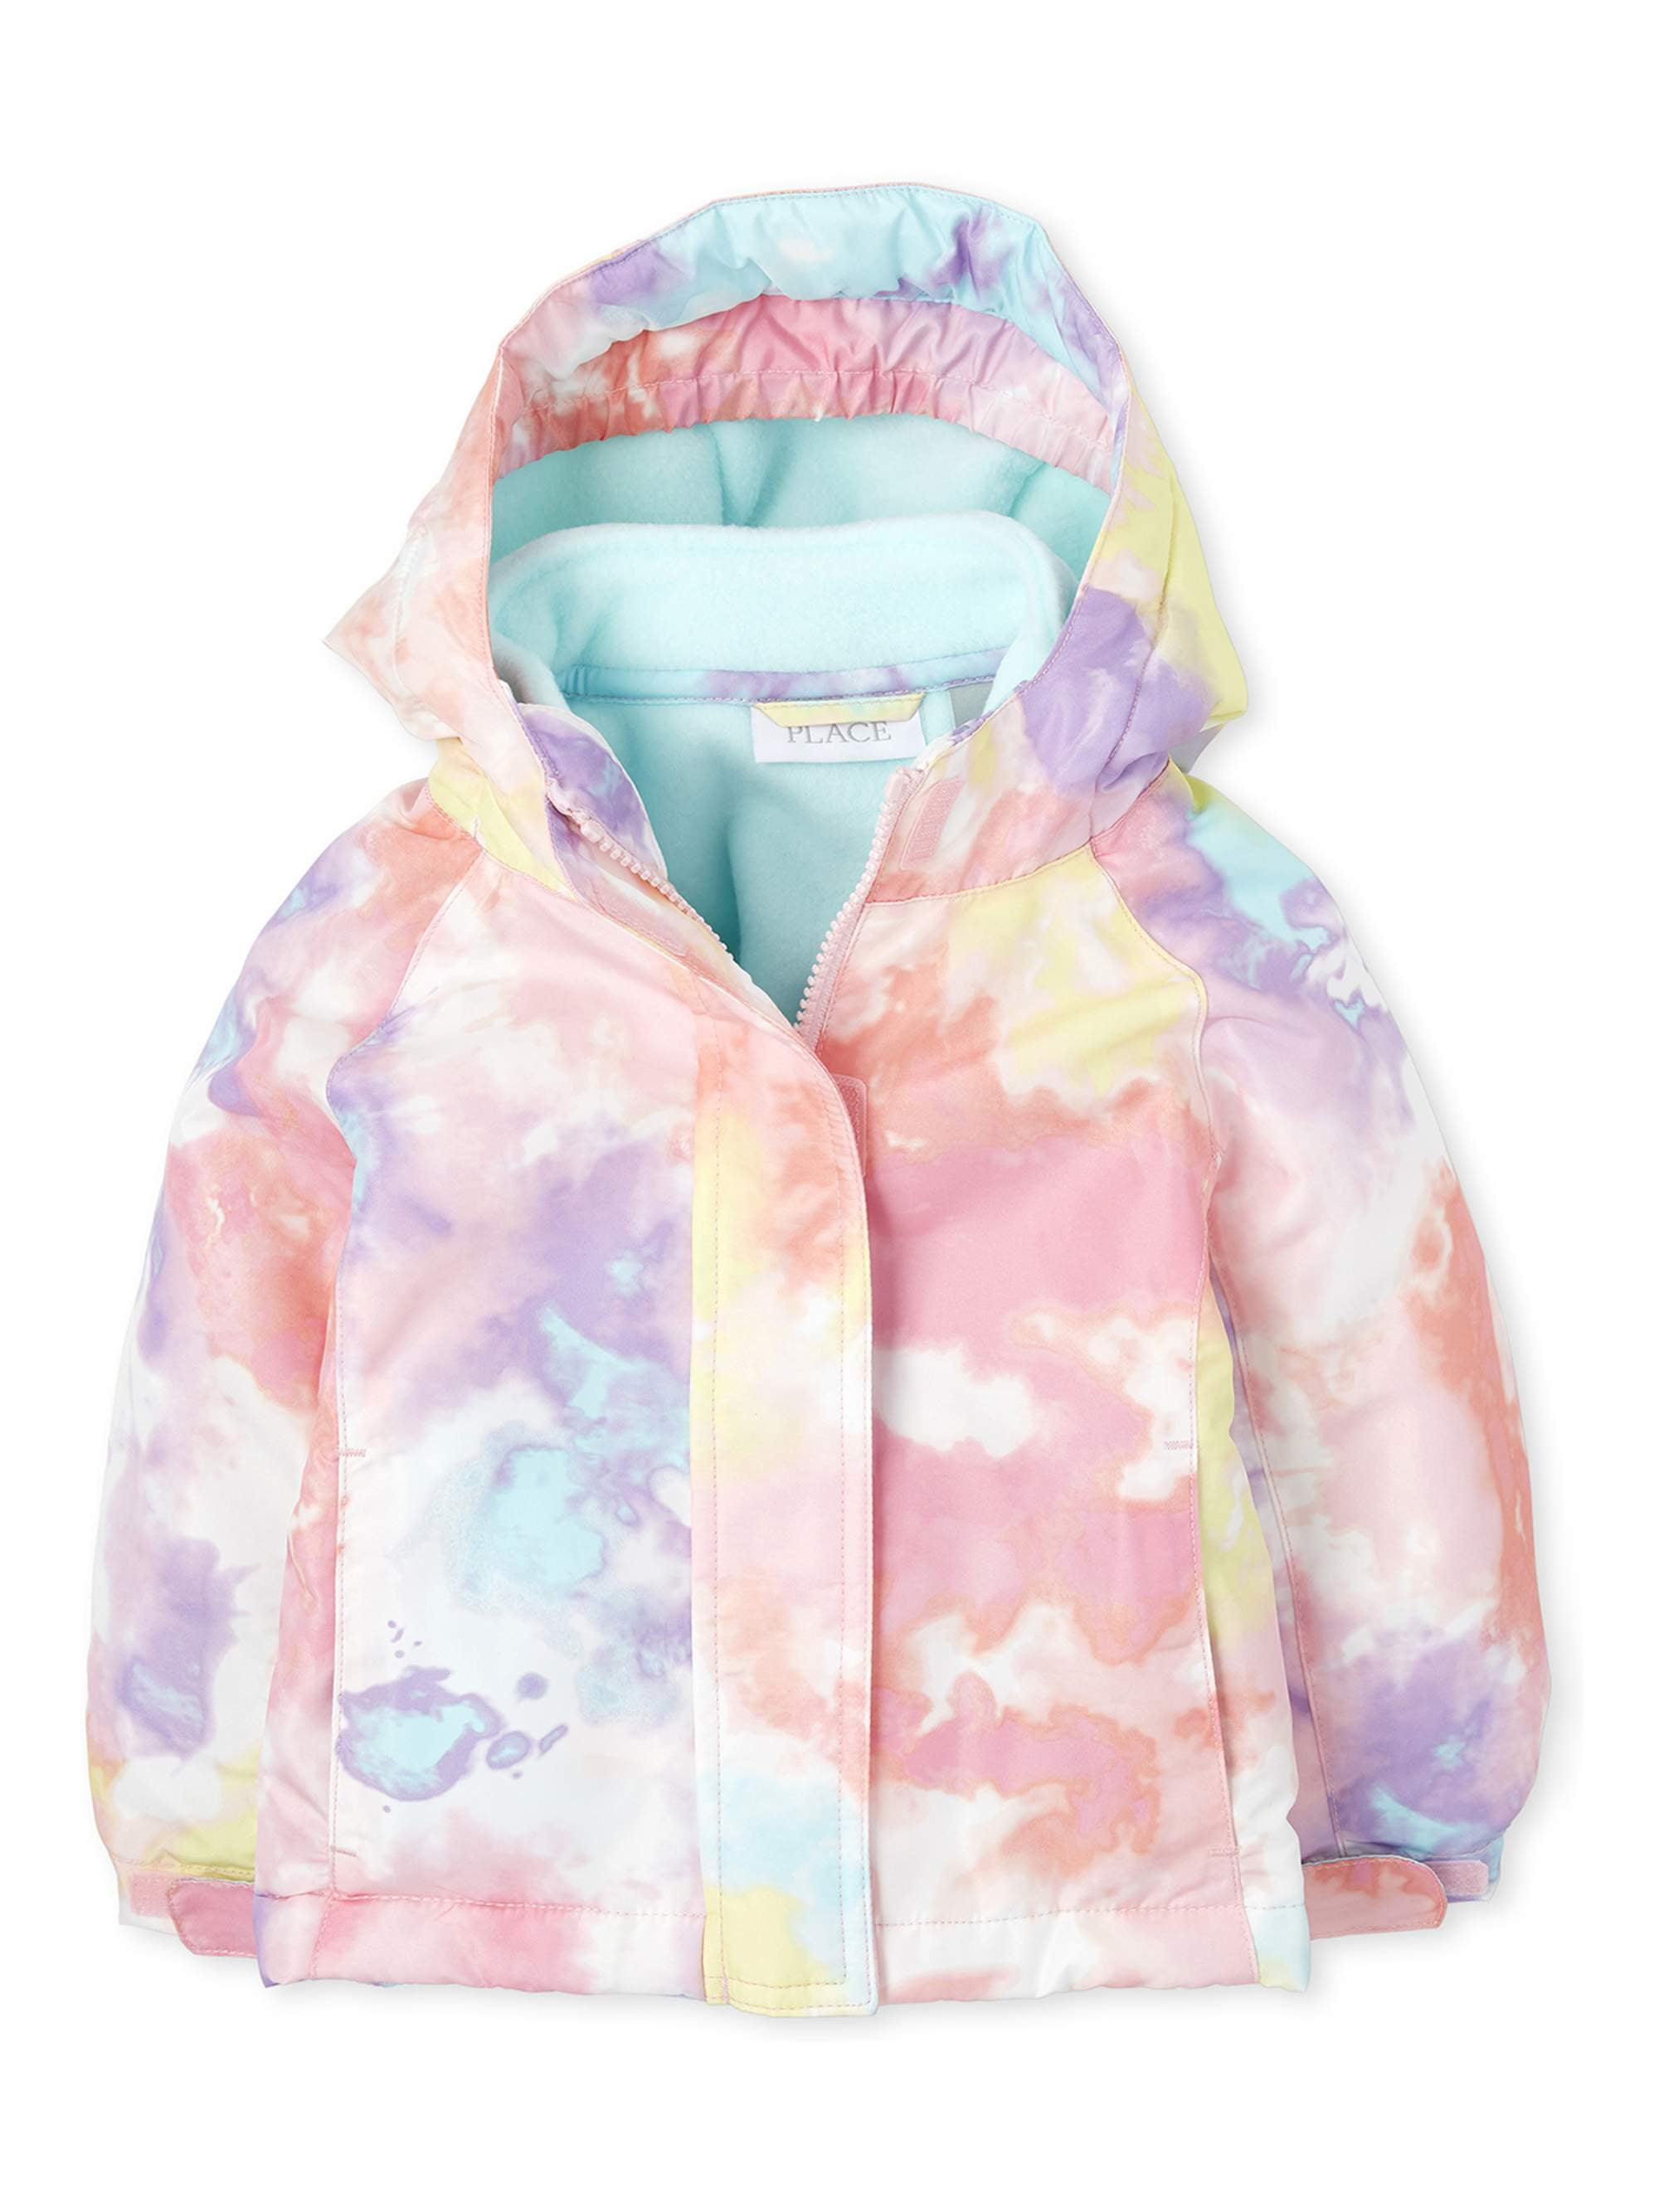 Details about   1pc baby kids girls boys warm fleece coat jacket fleece hoodie outerwear 3Colors